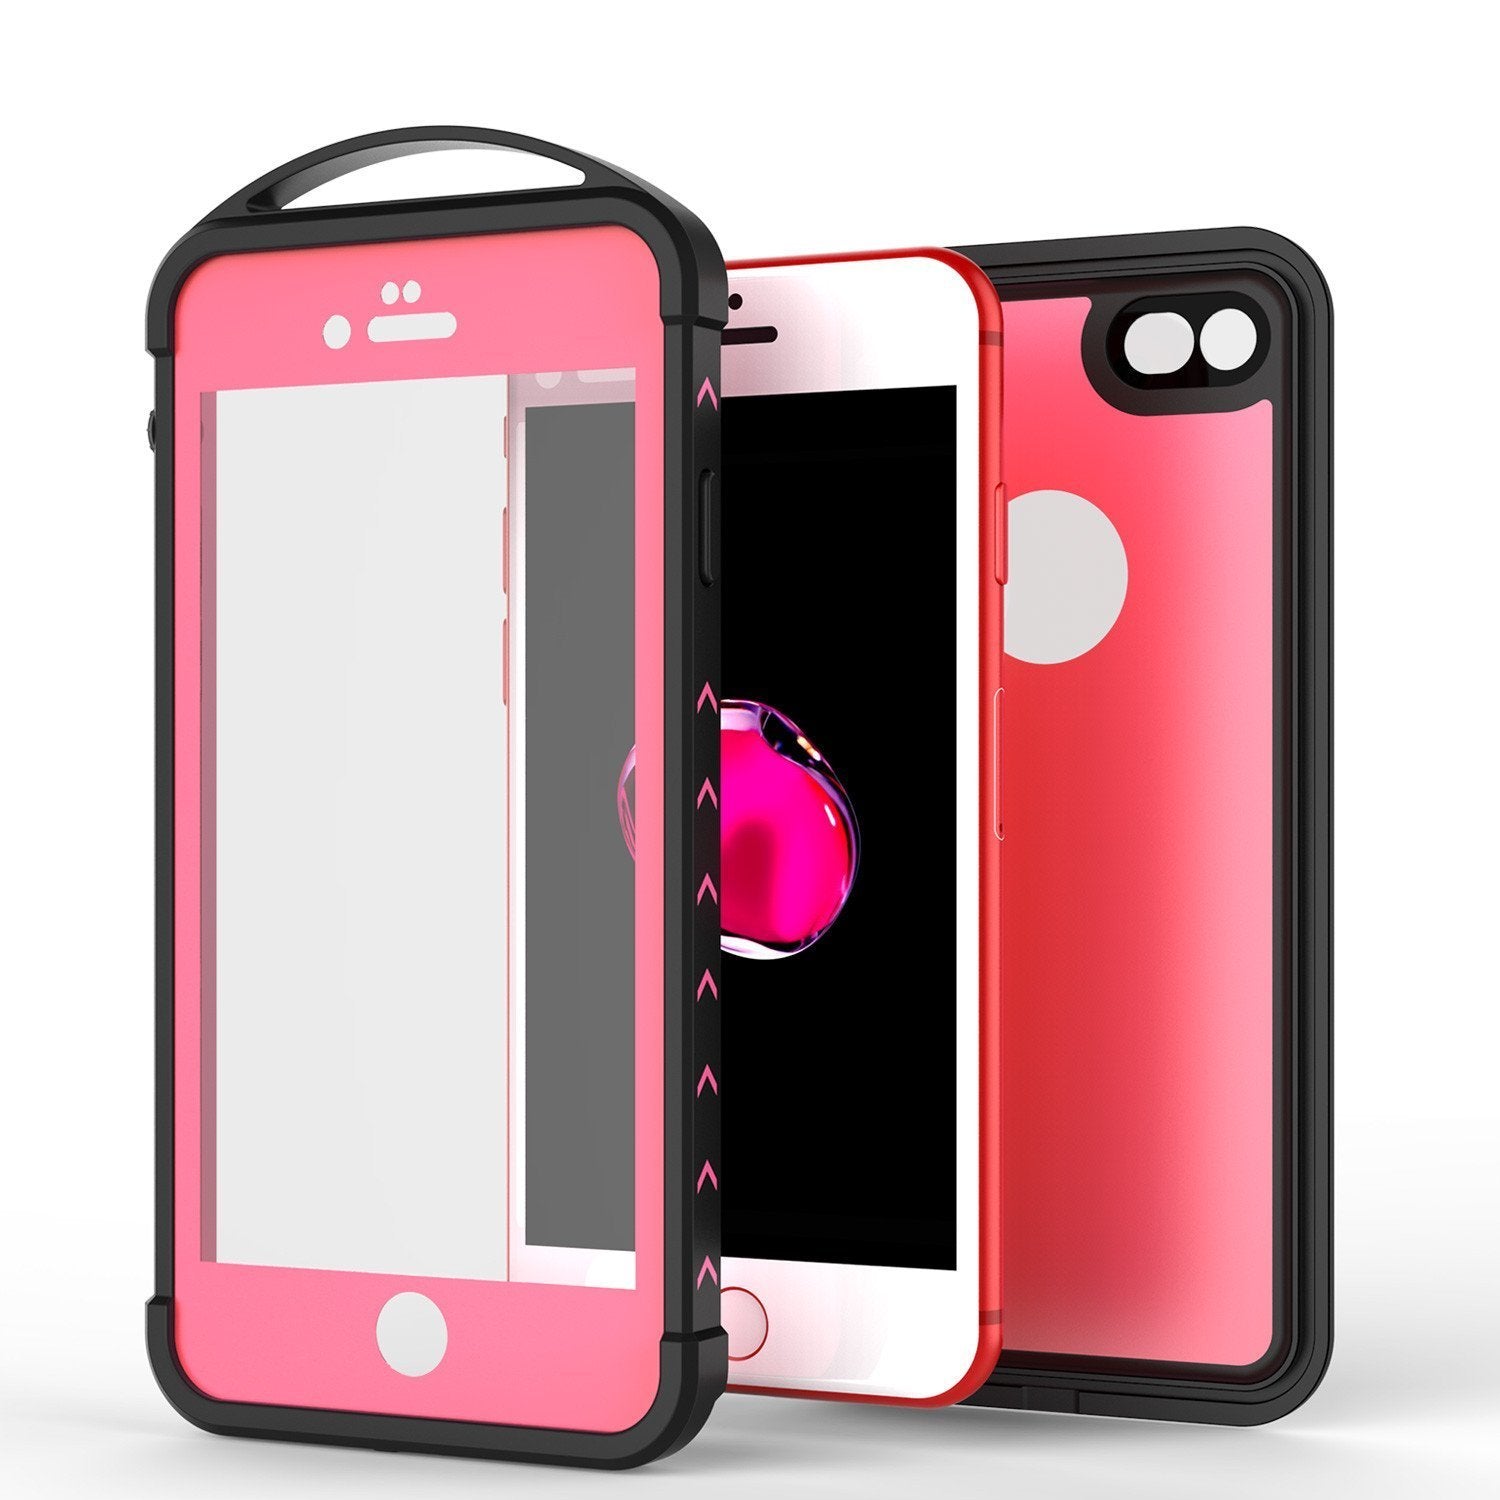 iPhone SE (4.7") Waterproof Case, Punkcase ALPINE Series, Pink | Heavy Duty Armor Cover